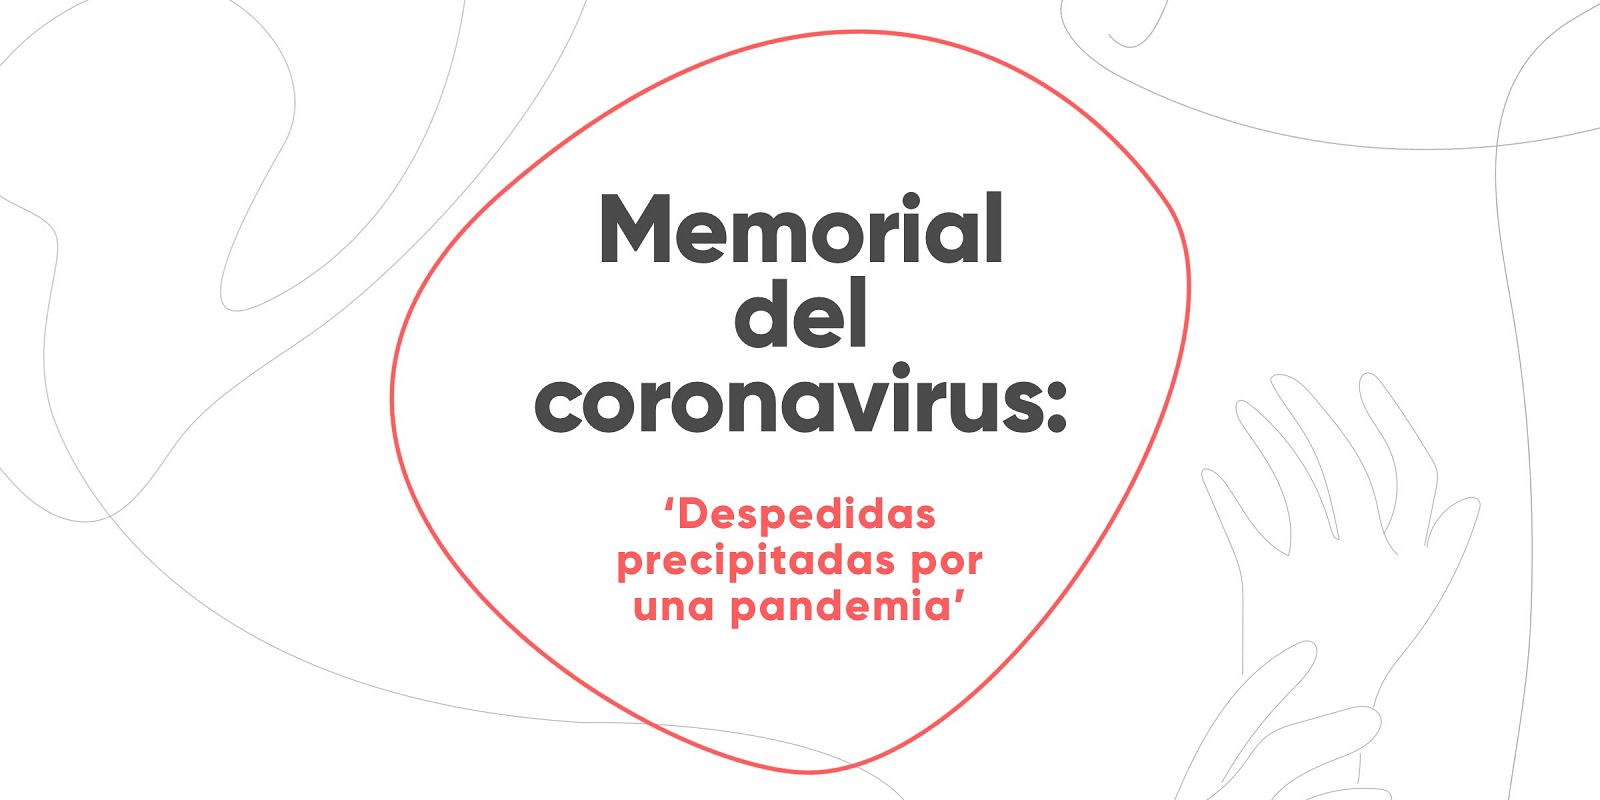 El memorial del coronavirus